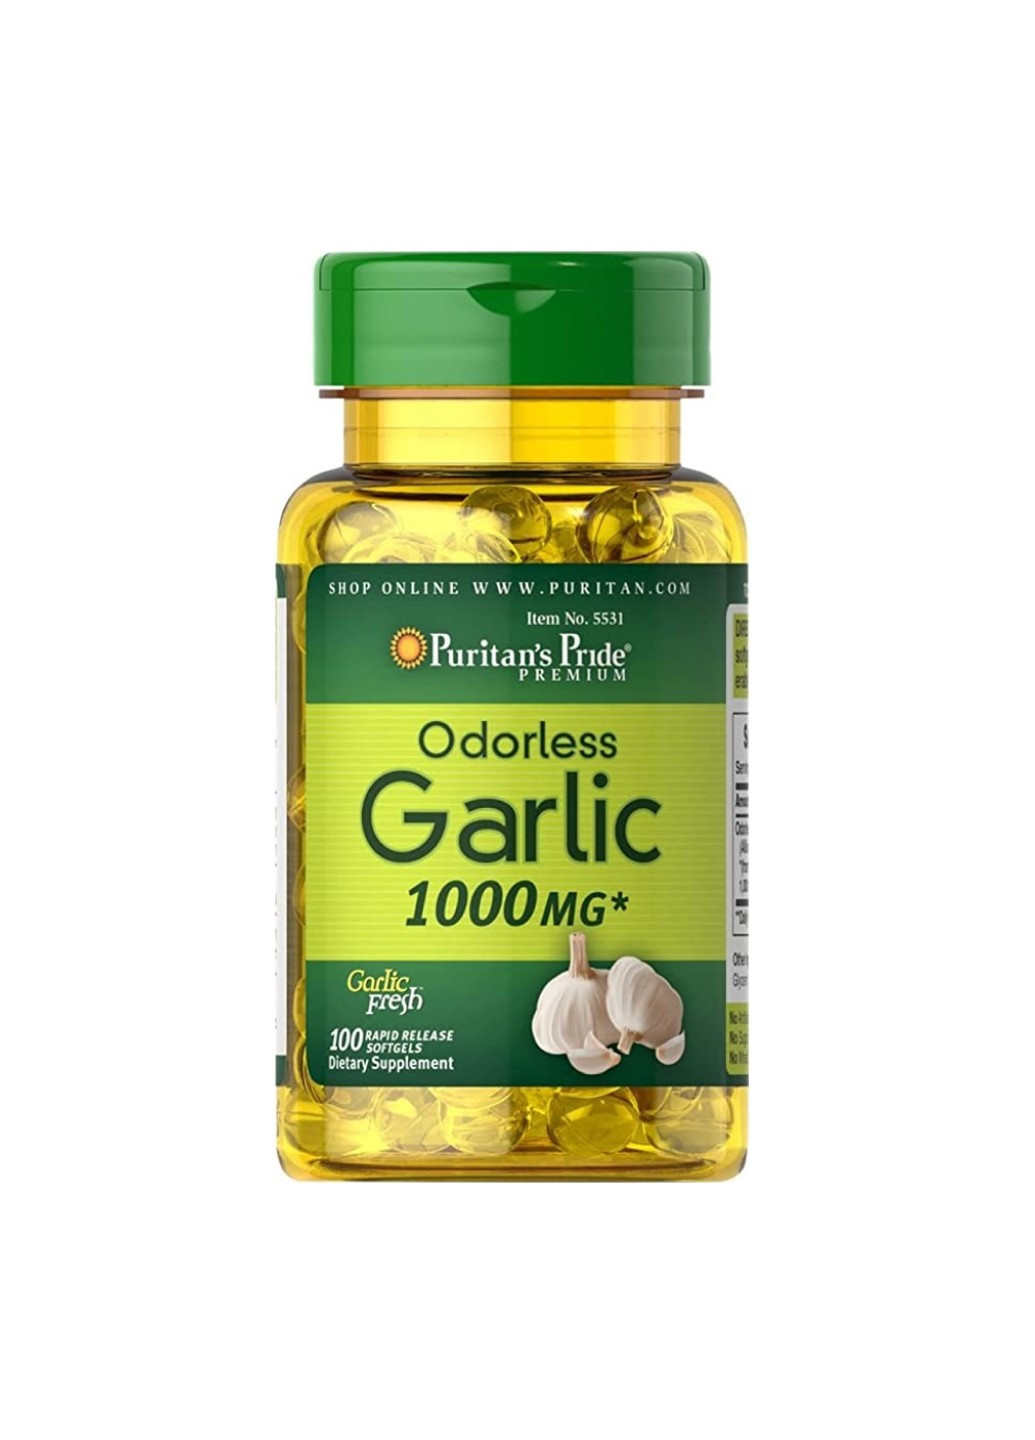 Екстракт Часнику (без запаху) Odorless Garlic 1000 мг - 100 софтгель Puritans Pride (269462054)